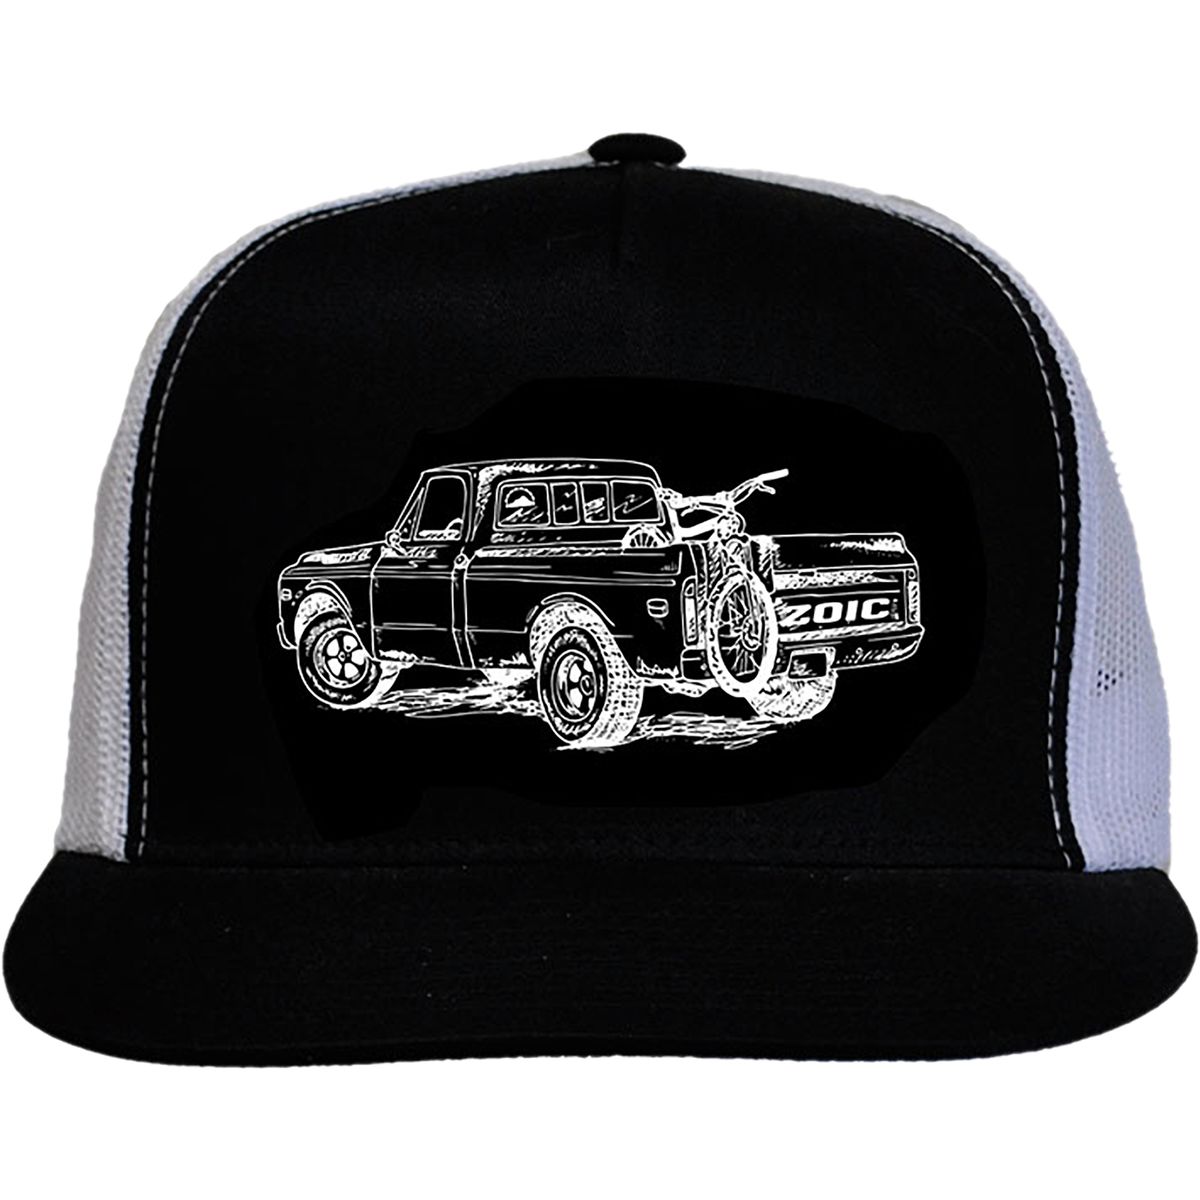 ZOIC Truck Hat